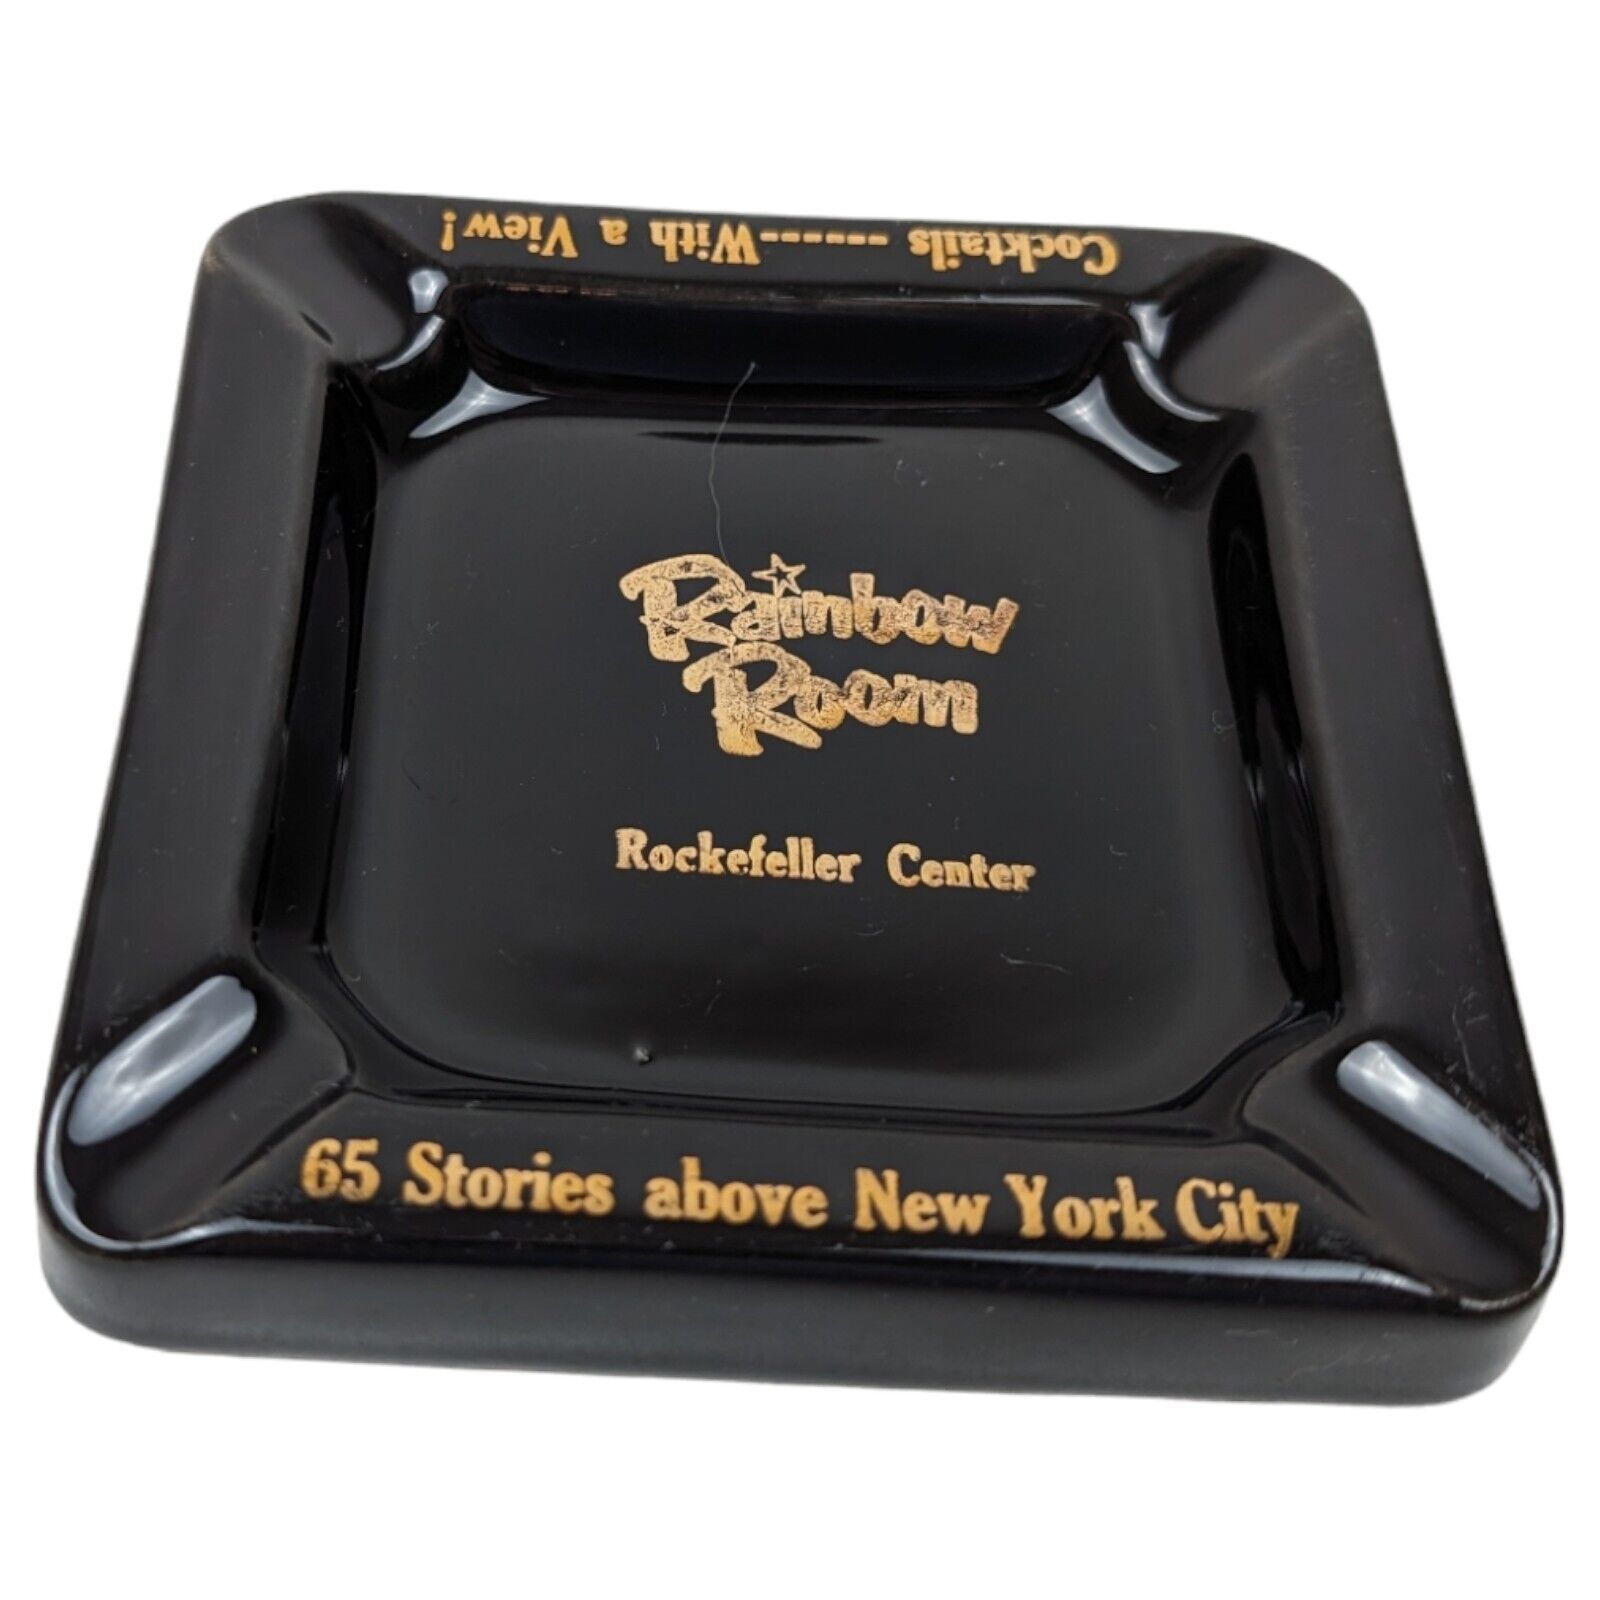 VTG Rainbow Room Rockefeller Center New York City NYC Ceramic Ashtray Black Gold